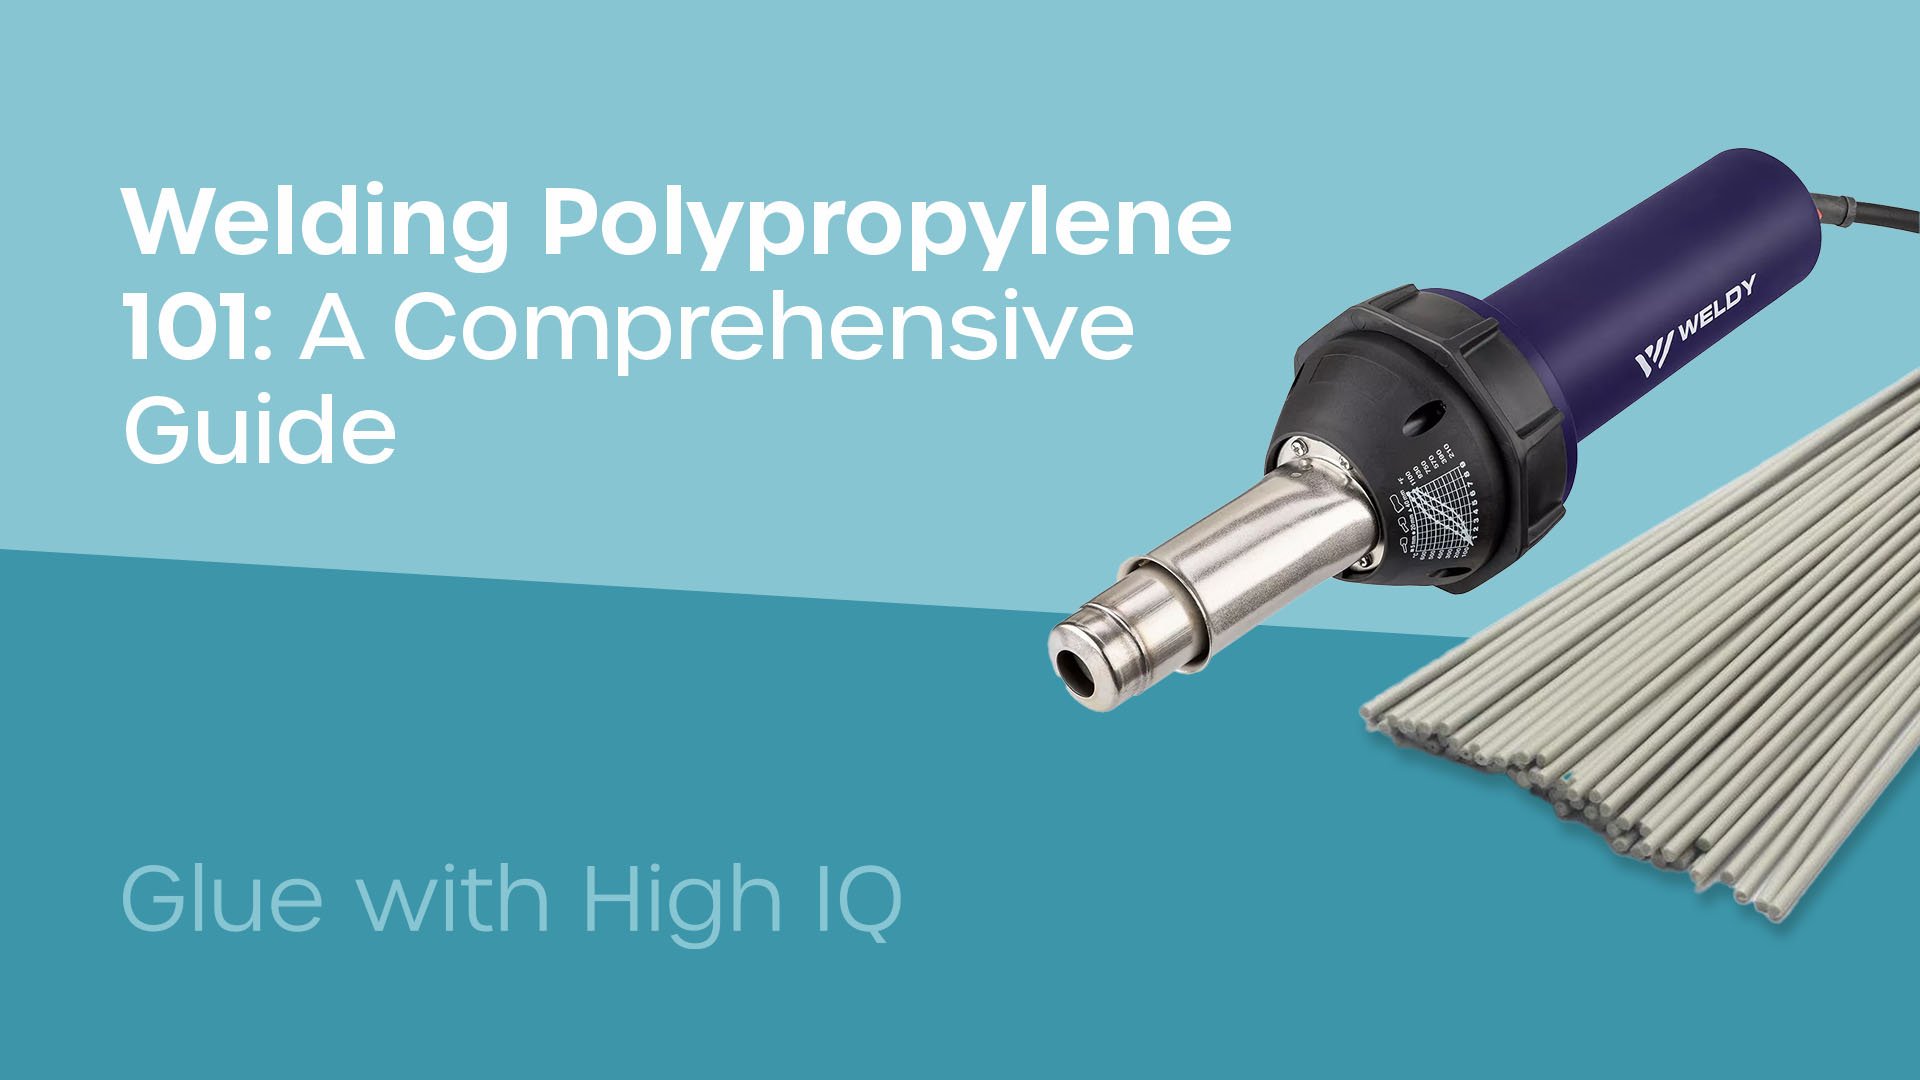 How to weld polypropylene